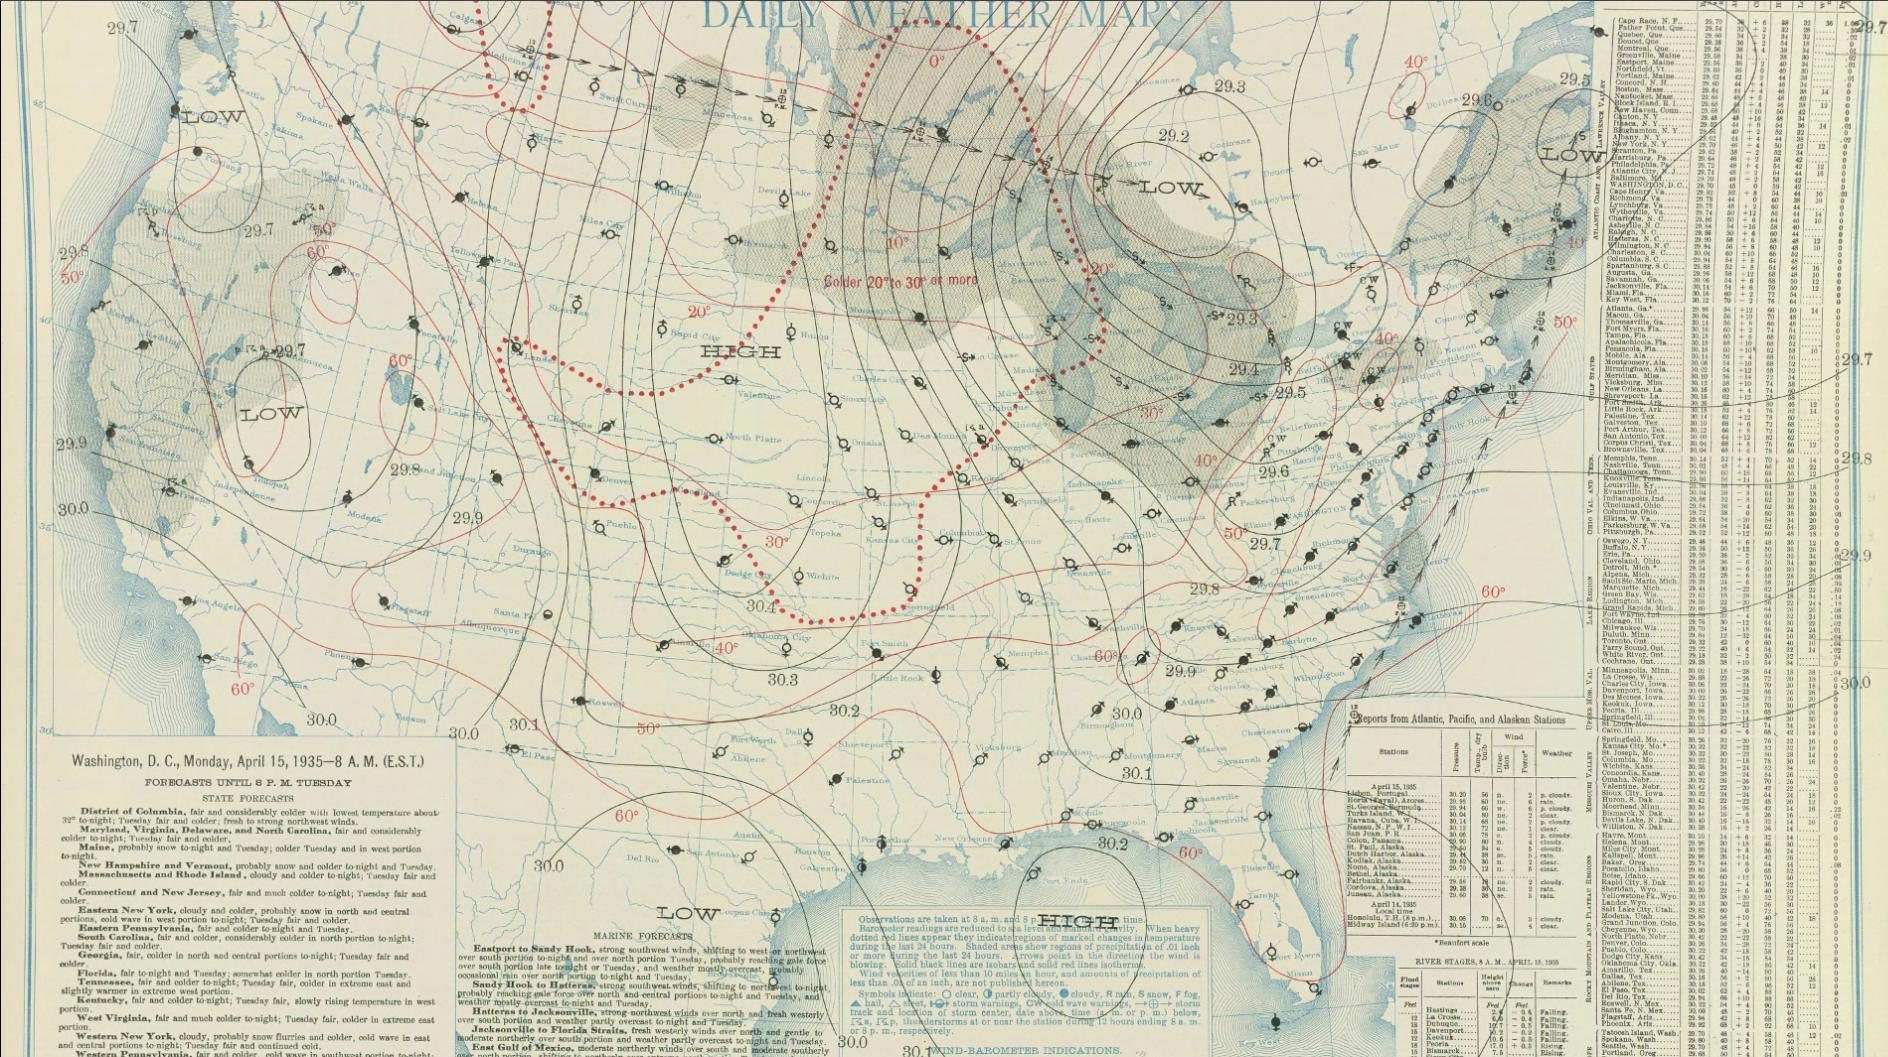 7:00 am CST April 15, 1935 U.S. Weather Burea Surface Analysis